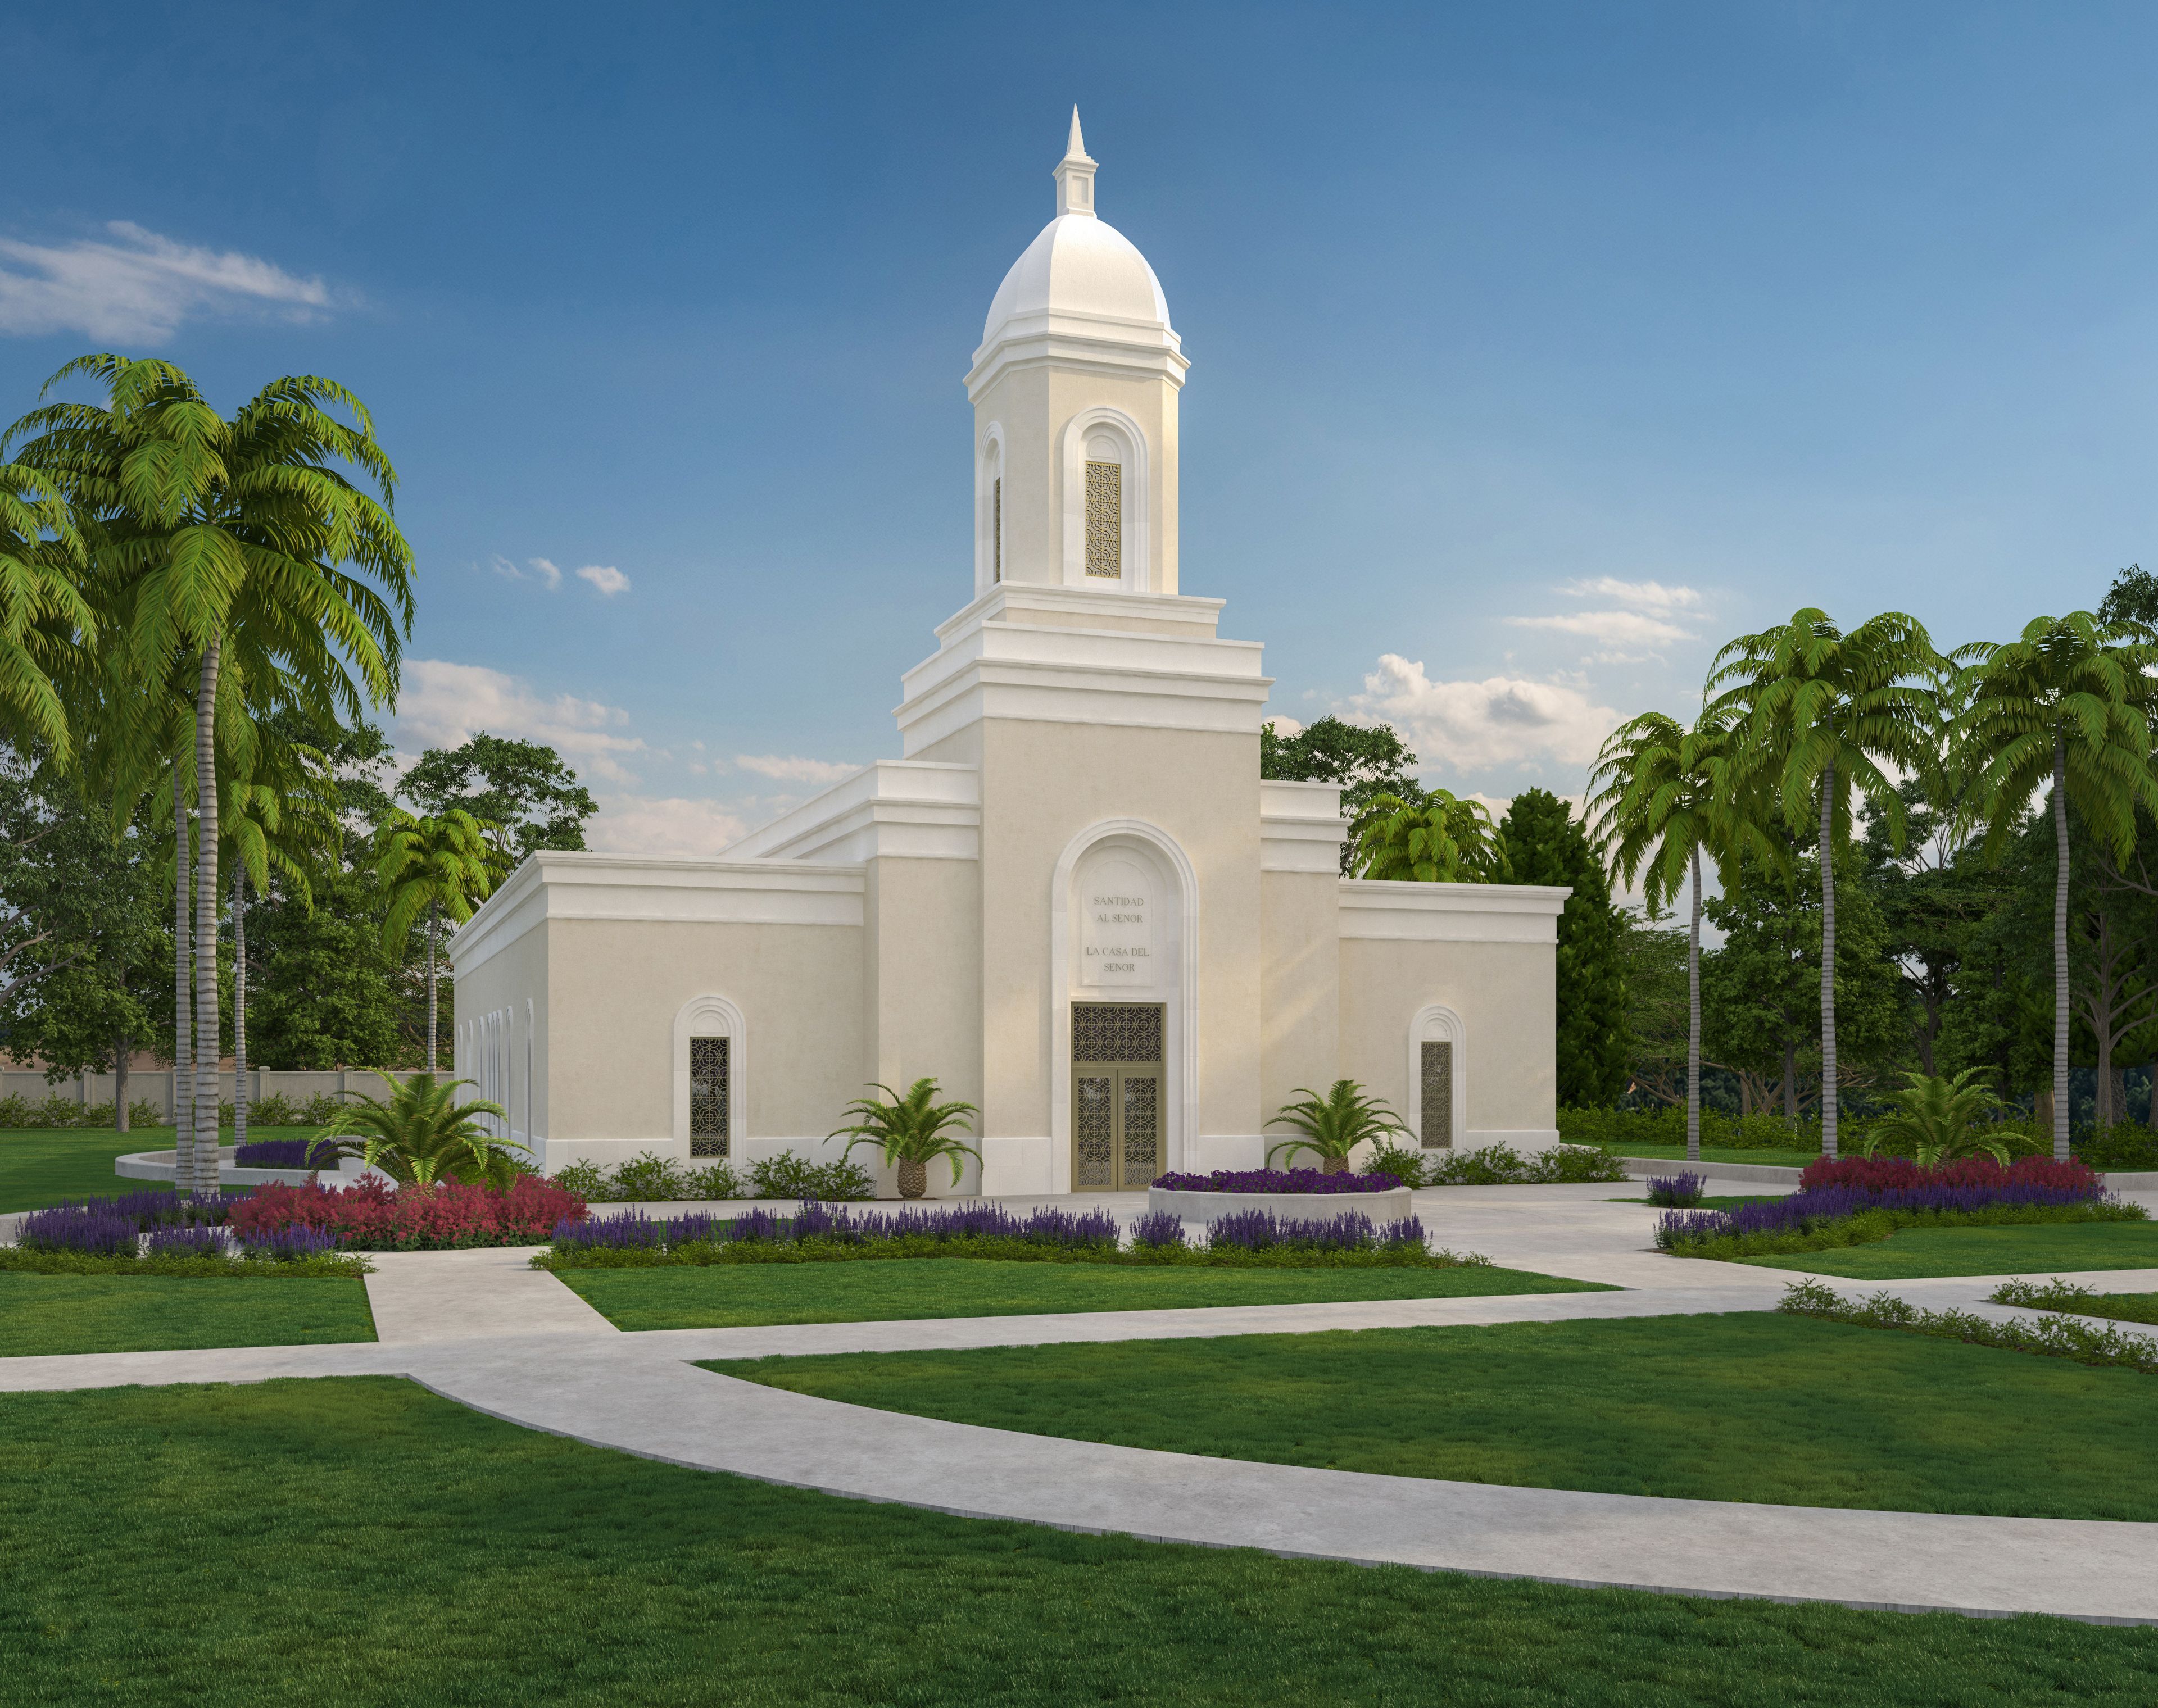 An artist’s rendering of the San Juan Puerto Rico Temple.